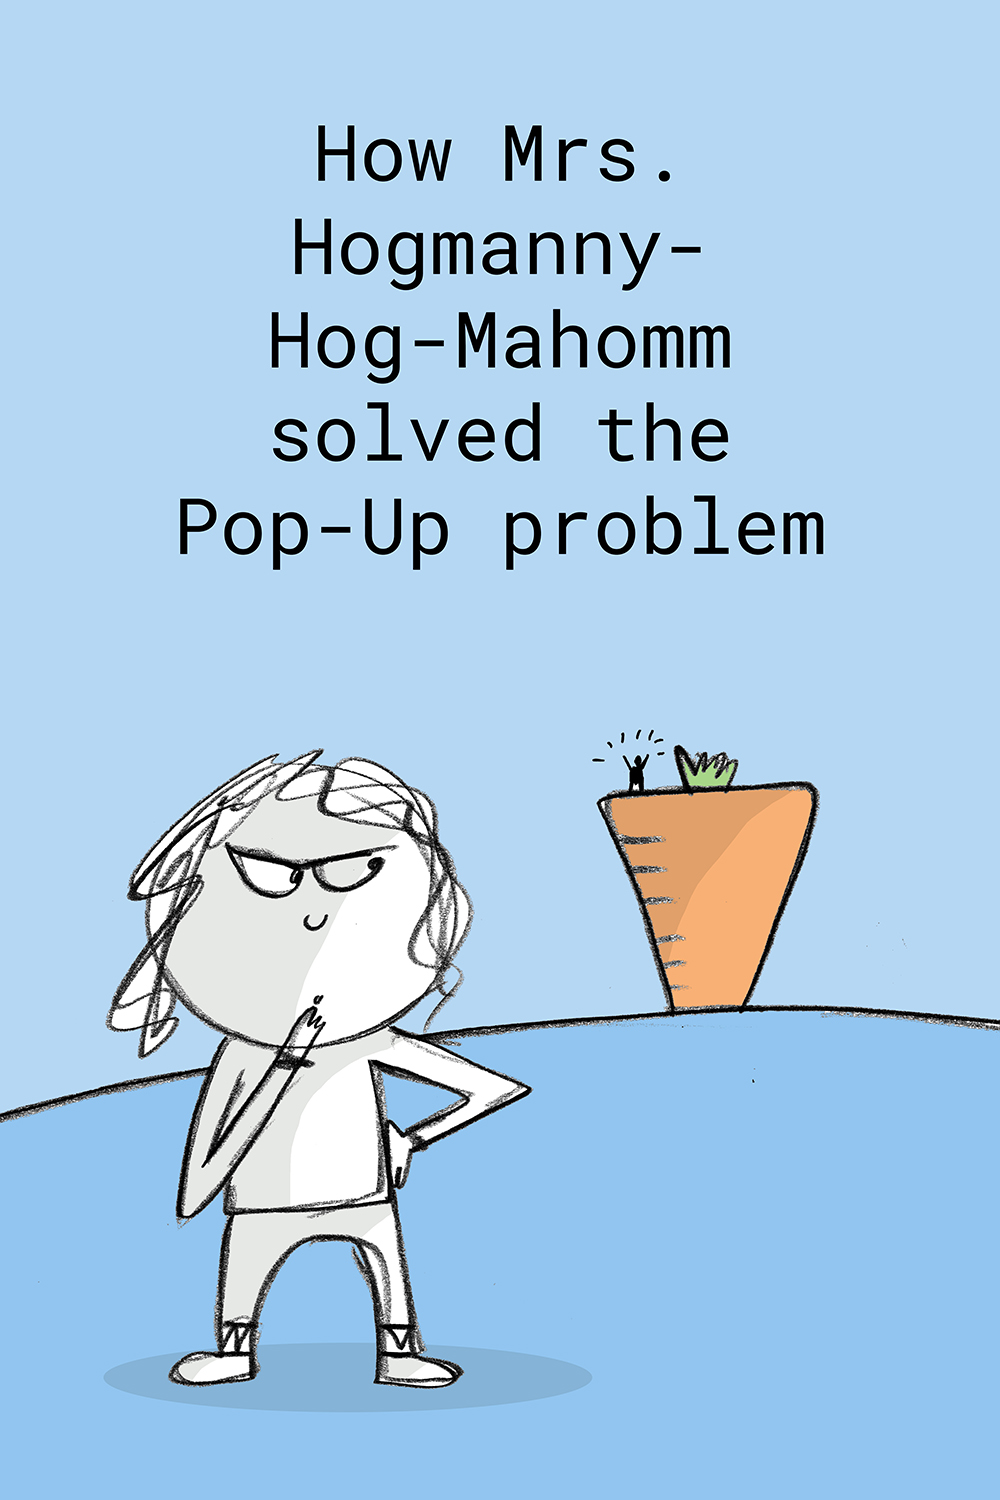 Mrs. Hogmanny-Hog-Mahomm